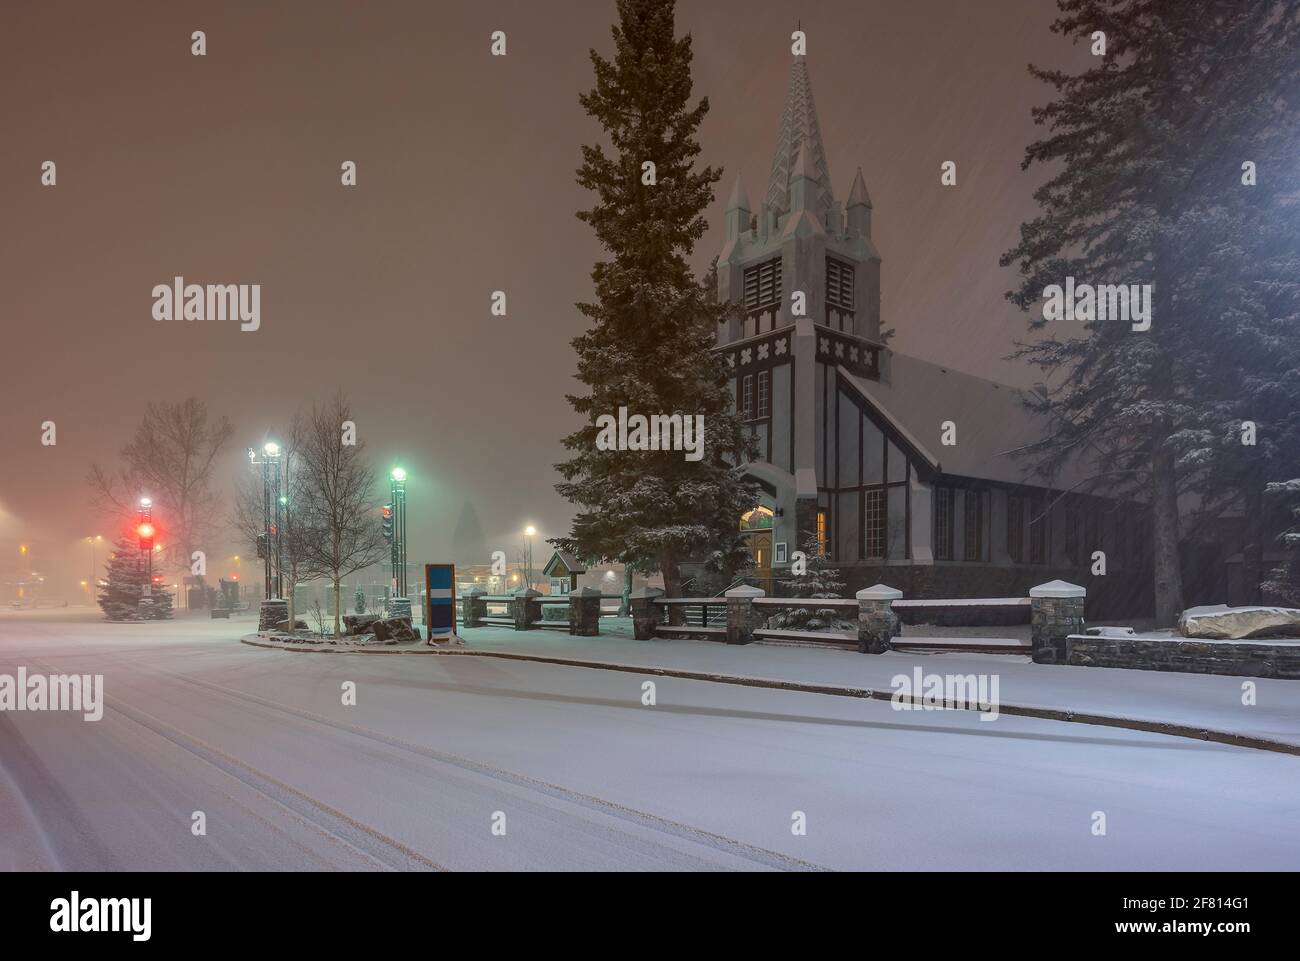 Exterior view of Saint Paul’s Presbyterian Church in Banff during morning snowfall Stock Photo